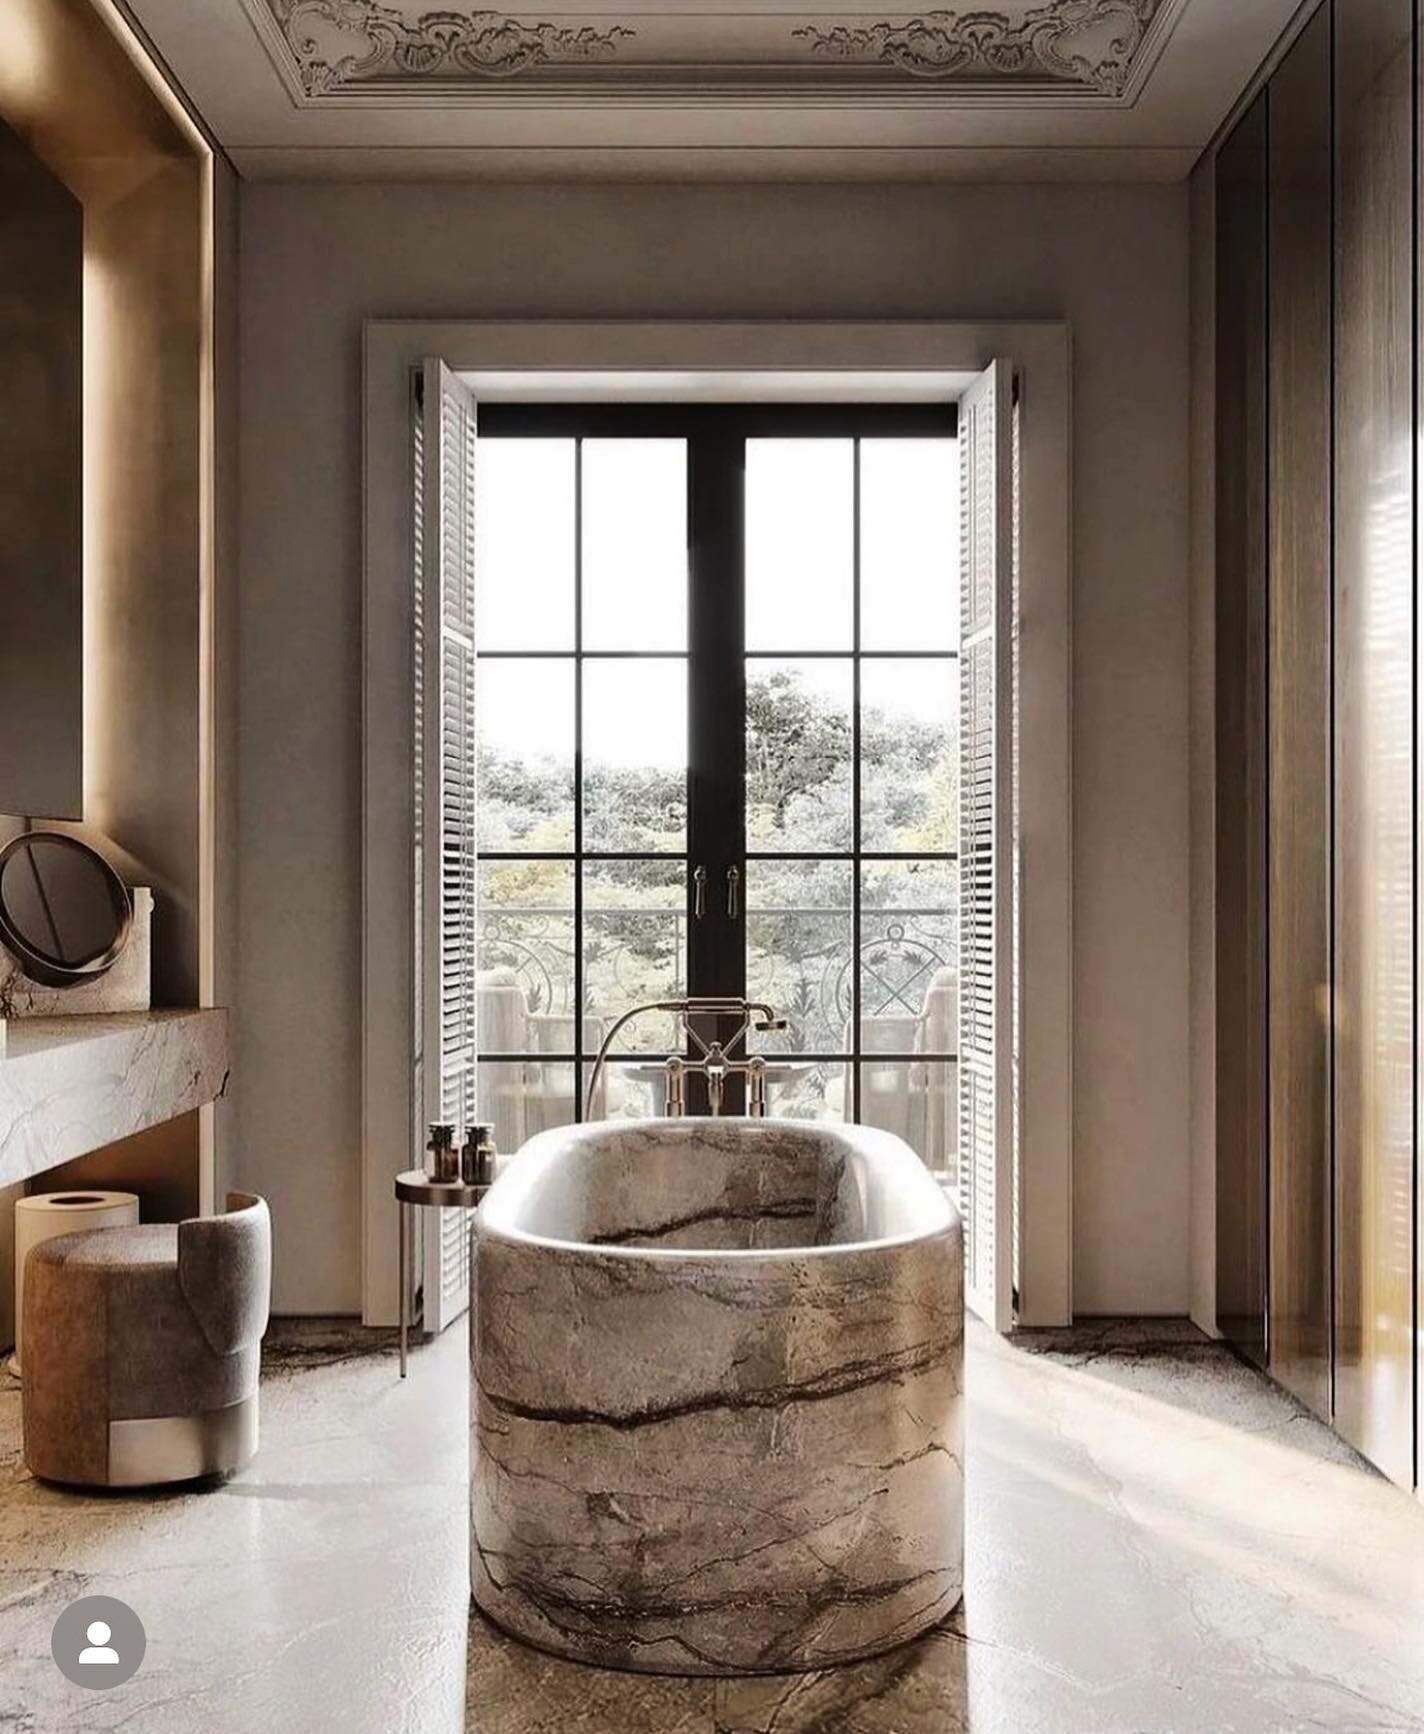 Tub of my dreams. 
&bull;
&bull;
&bull;
@yodezeen_architects

#Interiordesign #marbletub #bathroomdesign #roomwithaview #tubsofInstagram  #soakInStyle